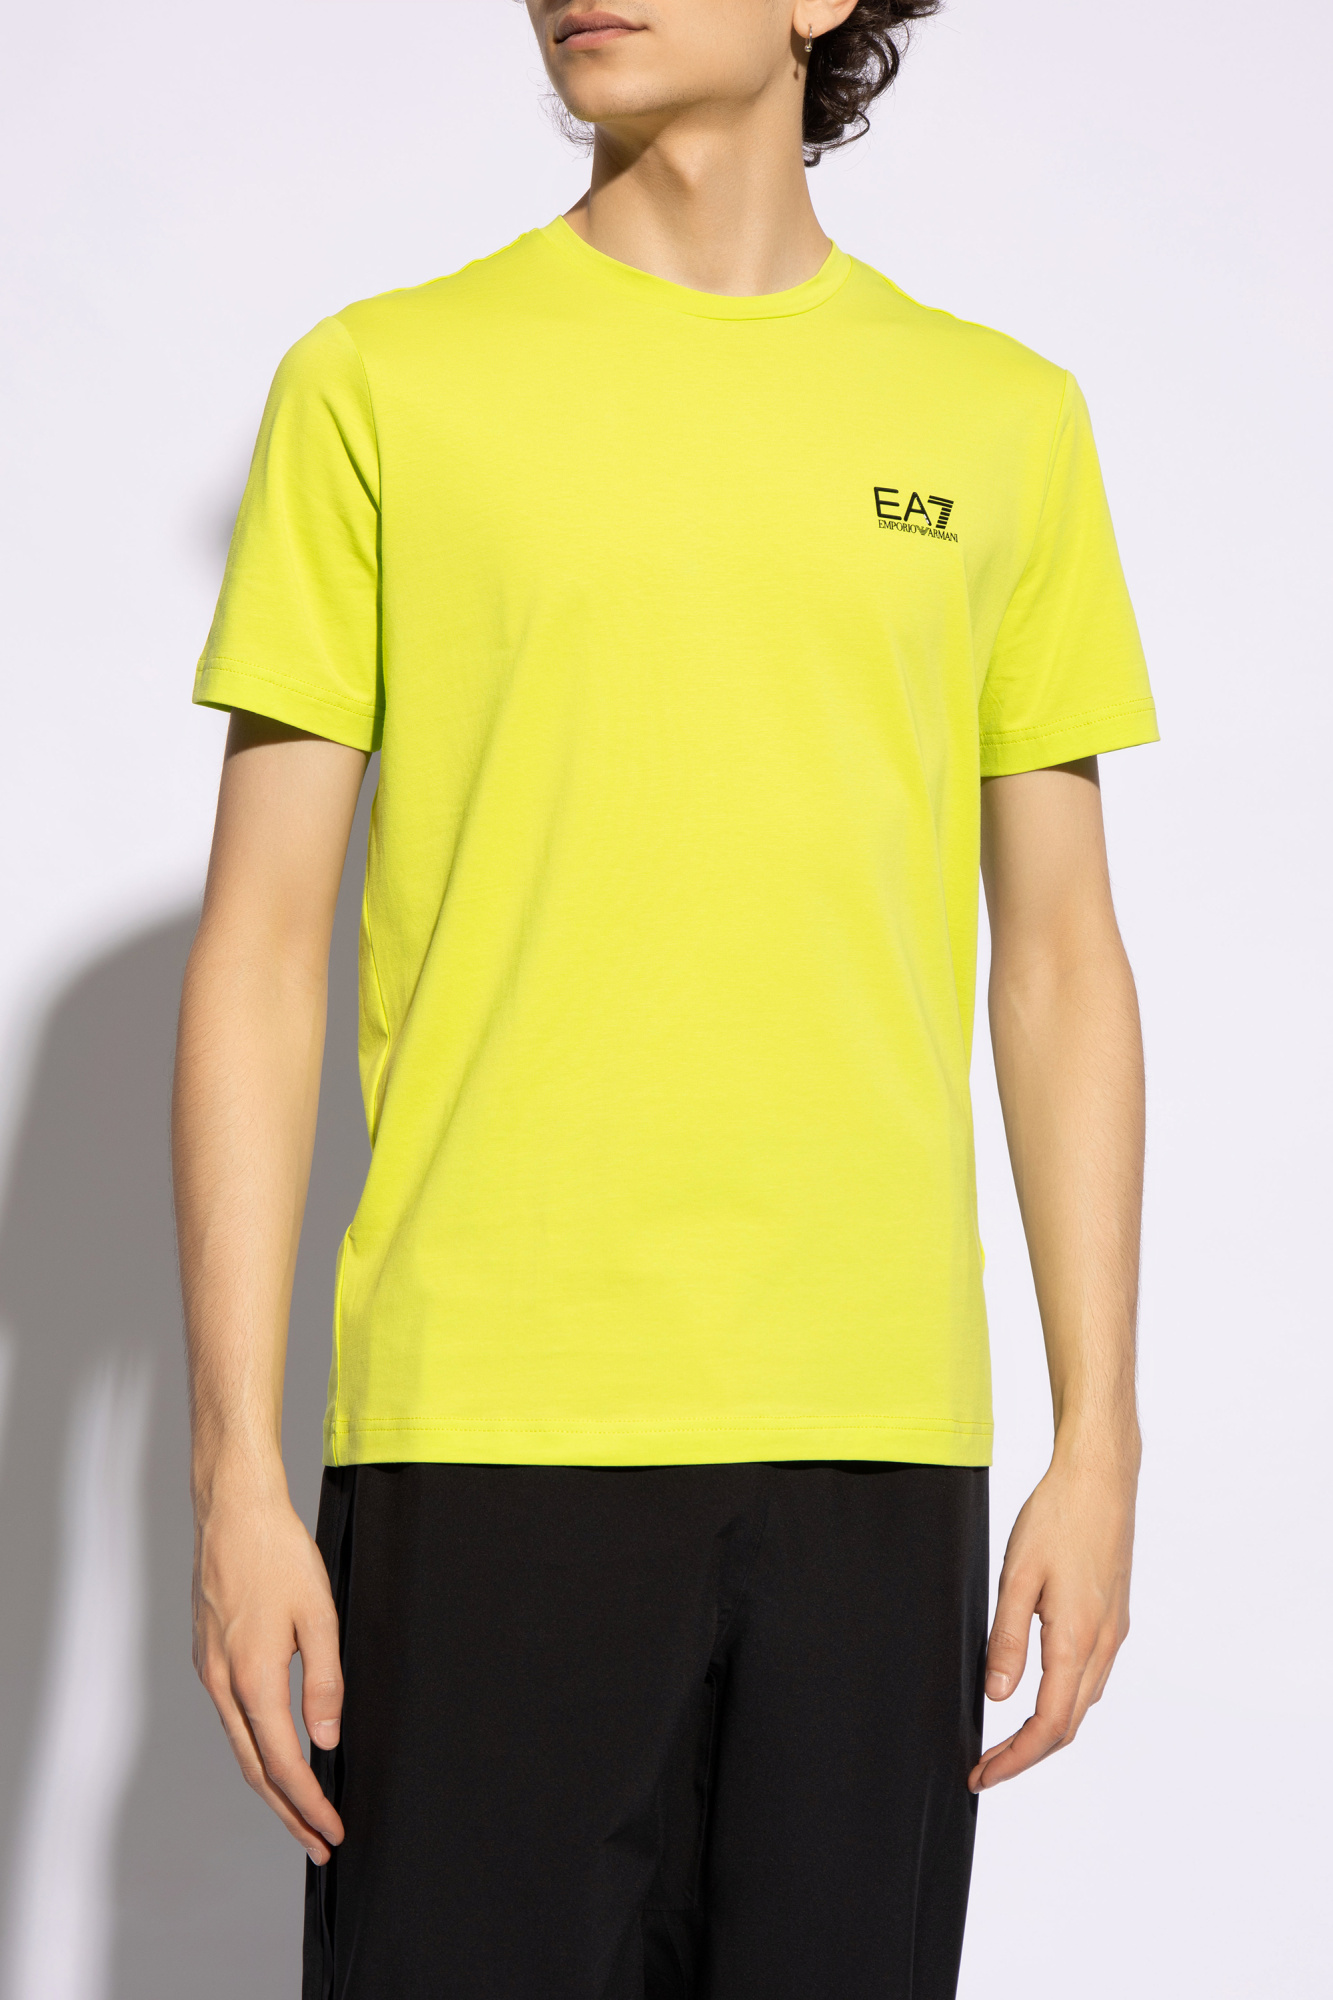 Neon T-shirt with logo EA7 Emporio Armani - Vitkac GB